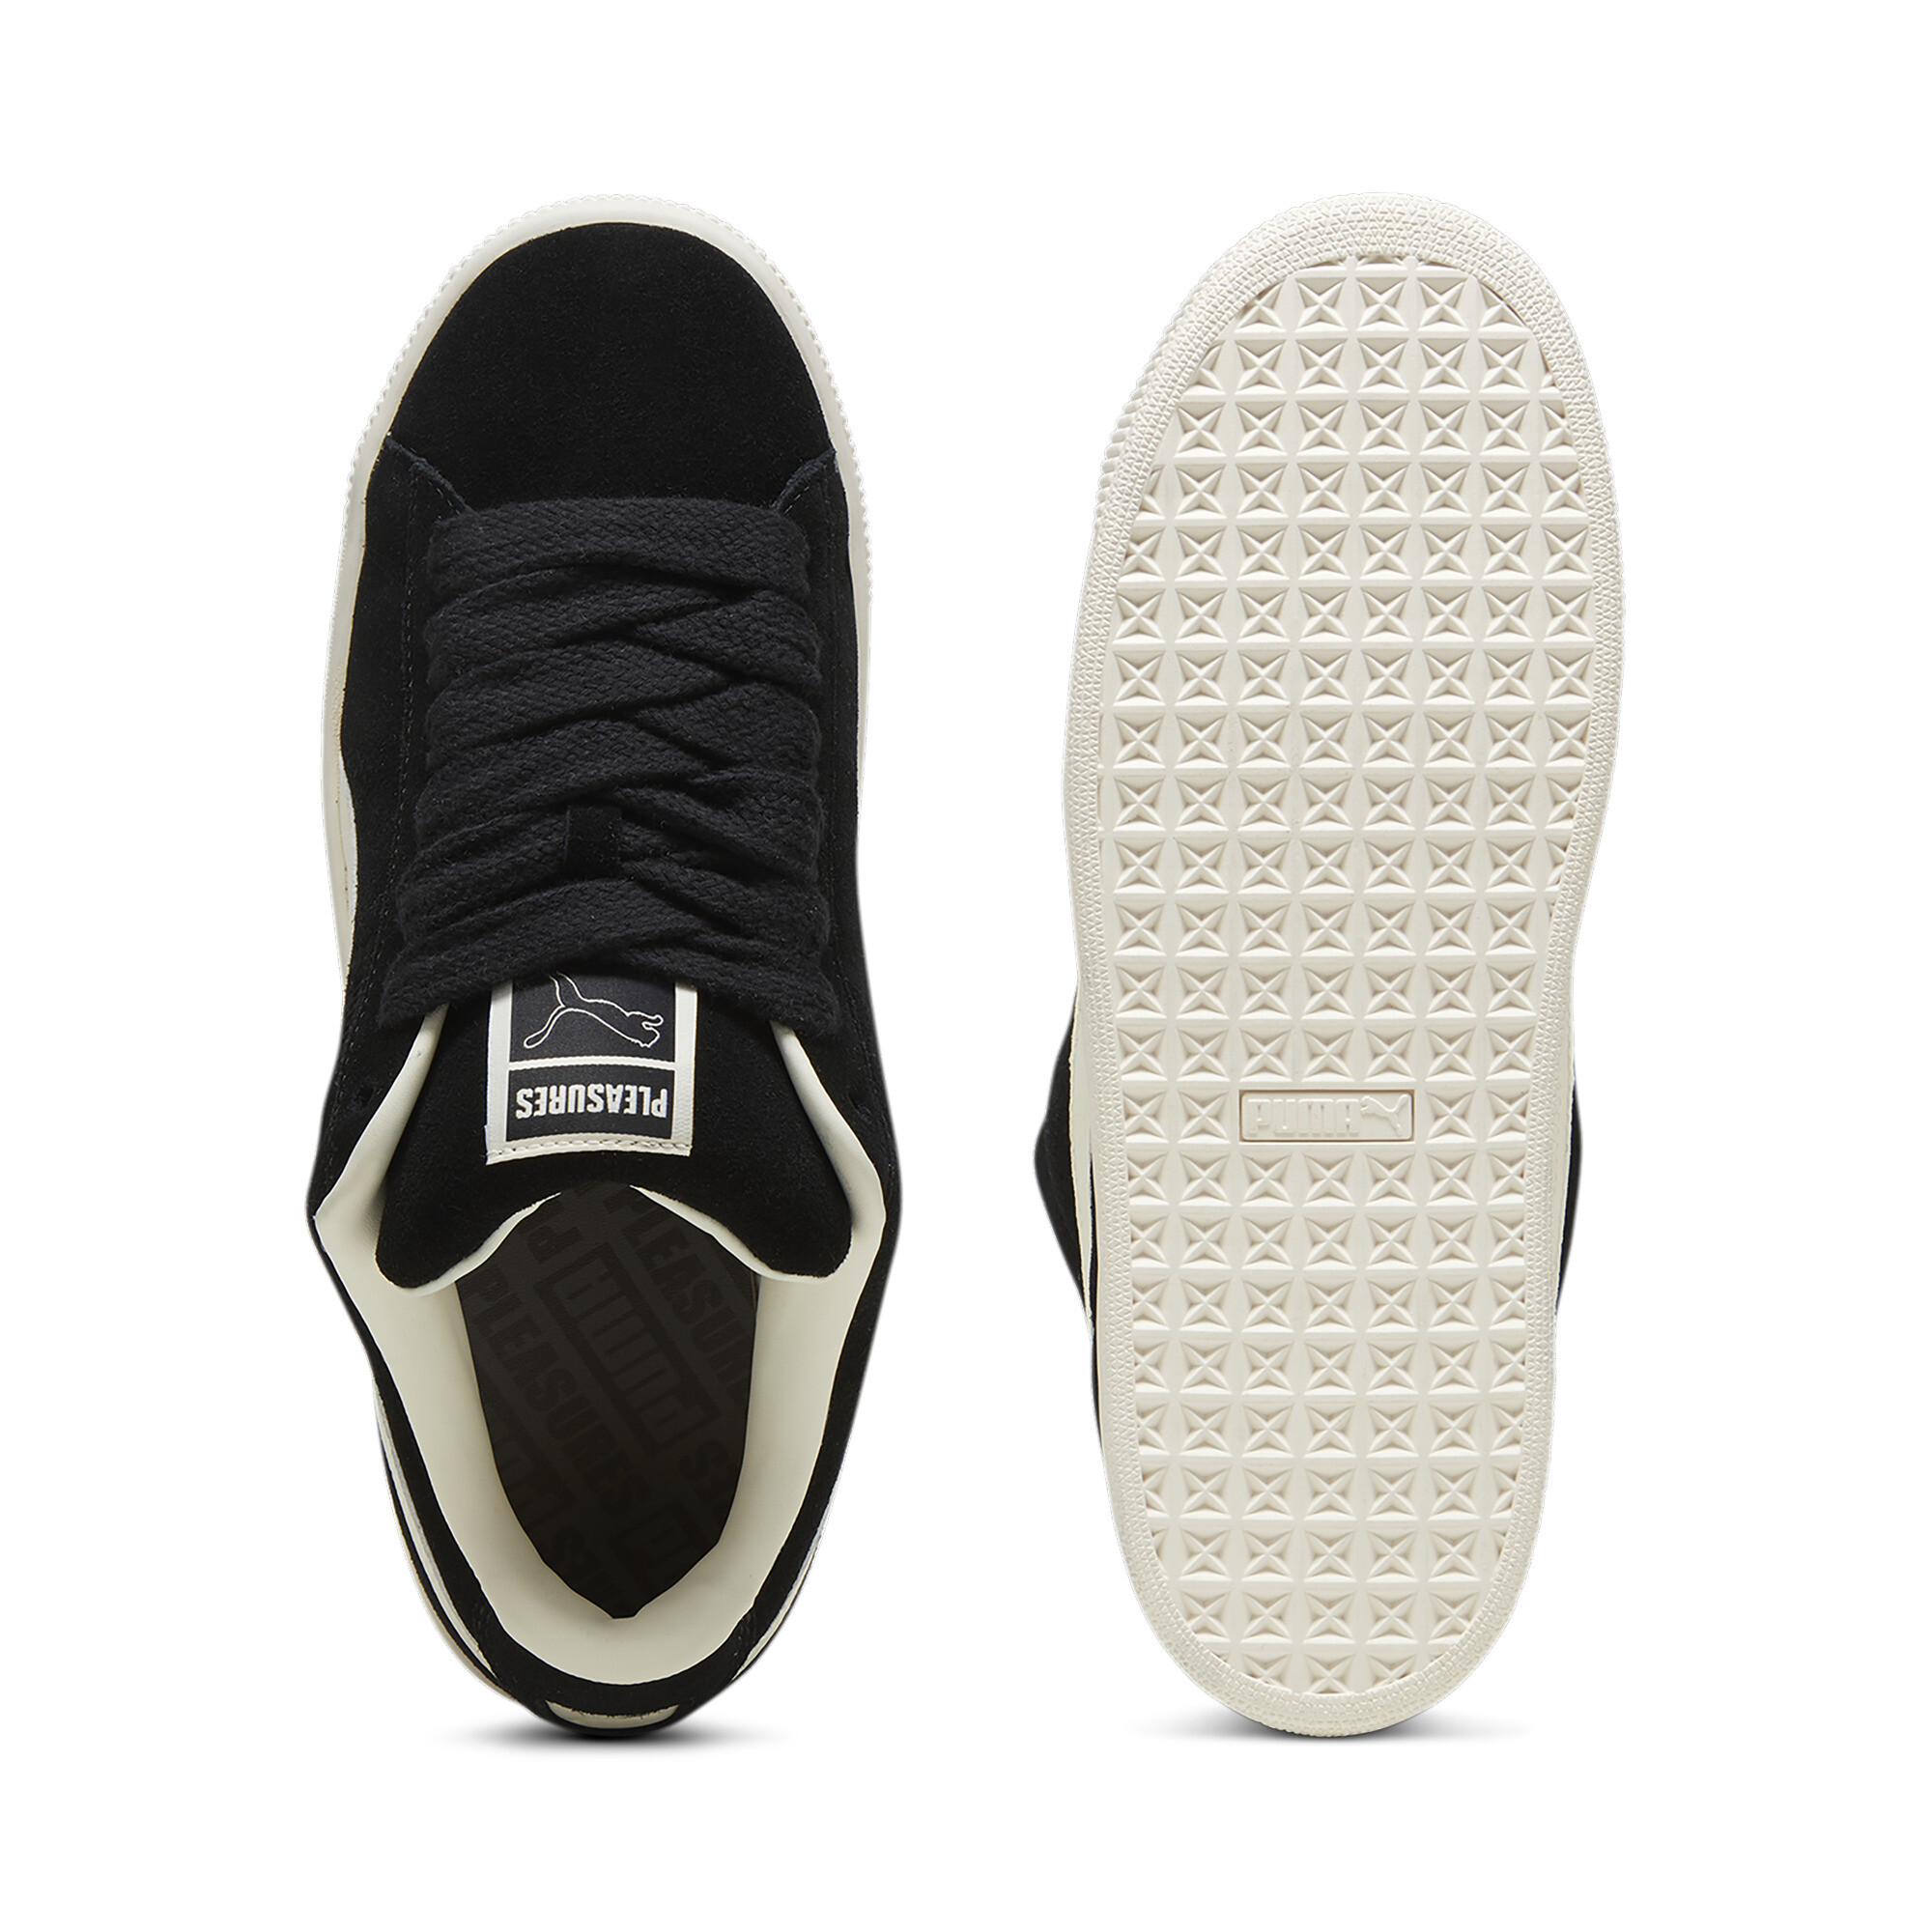 Men's PUMA X PLEASURES Suede XL Sneakers In Black, Size EU 41